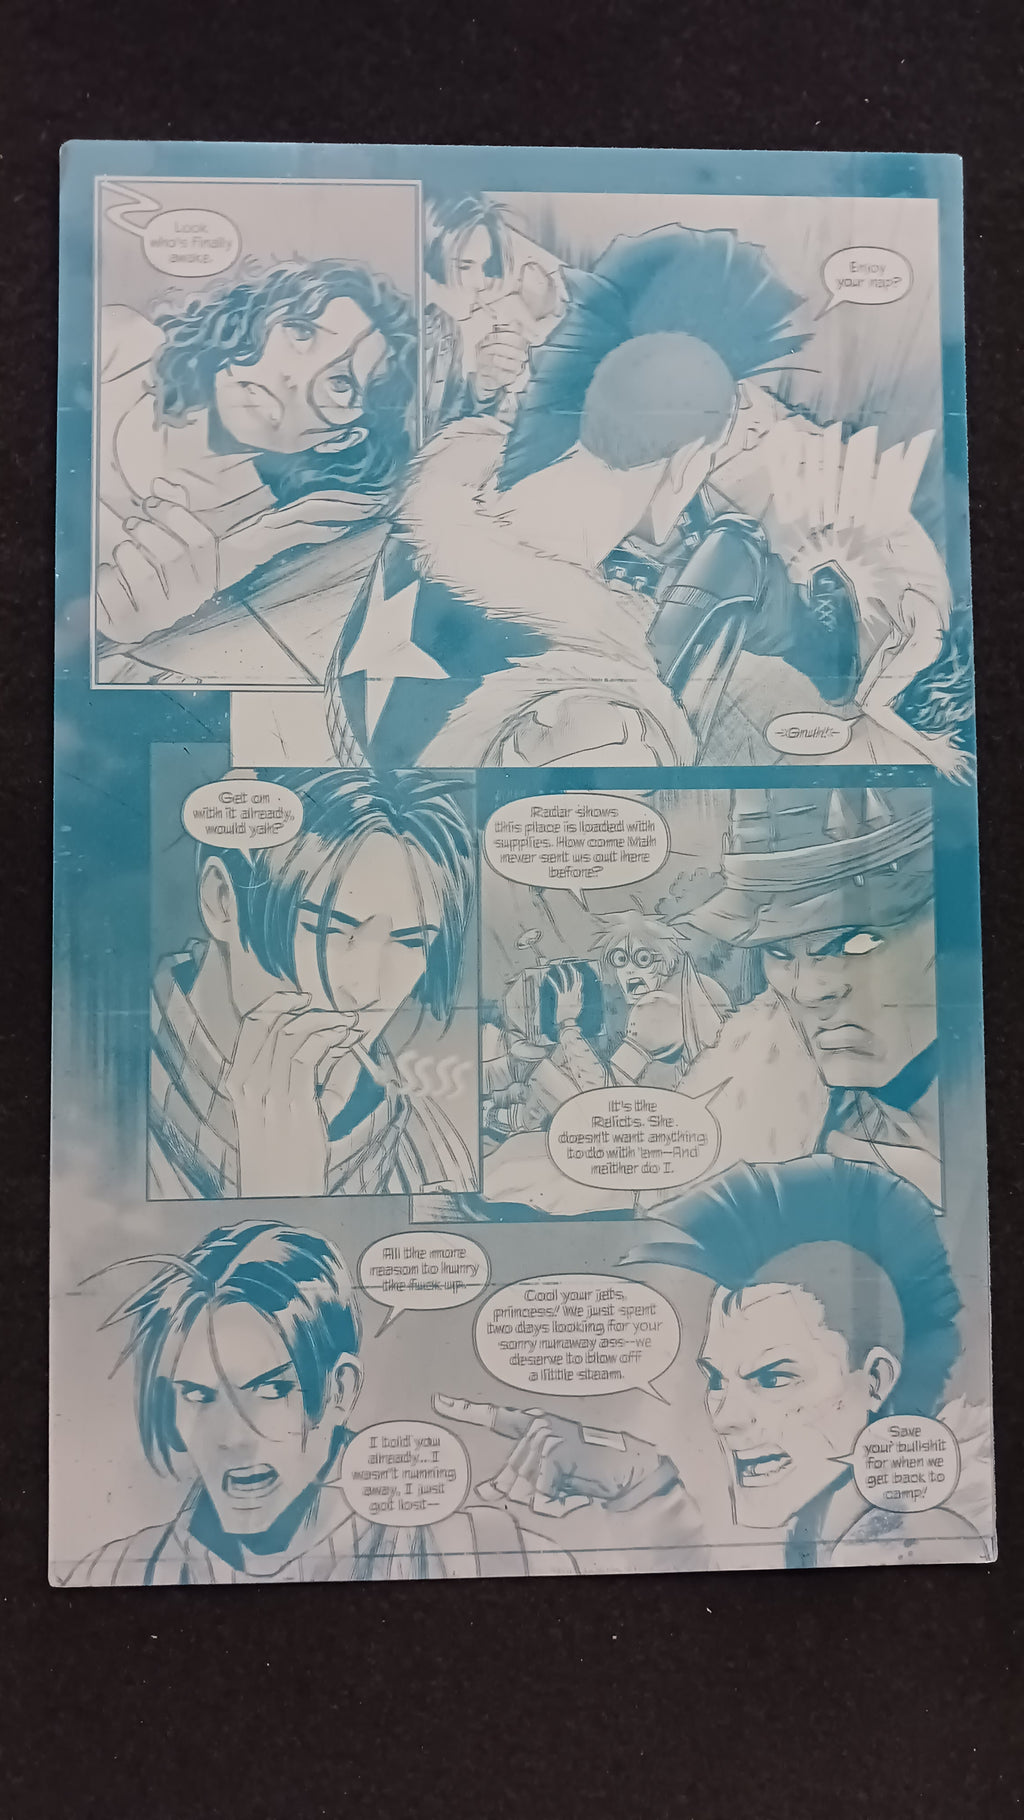 Darkland #3 - Page 2 - PRESSWORKS - Comic Art - Printer Plate - Cyan